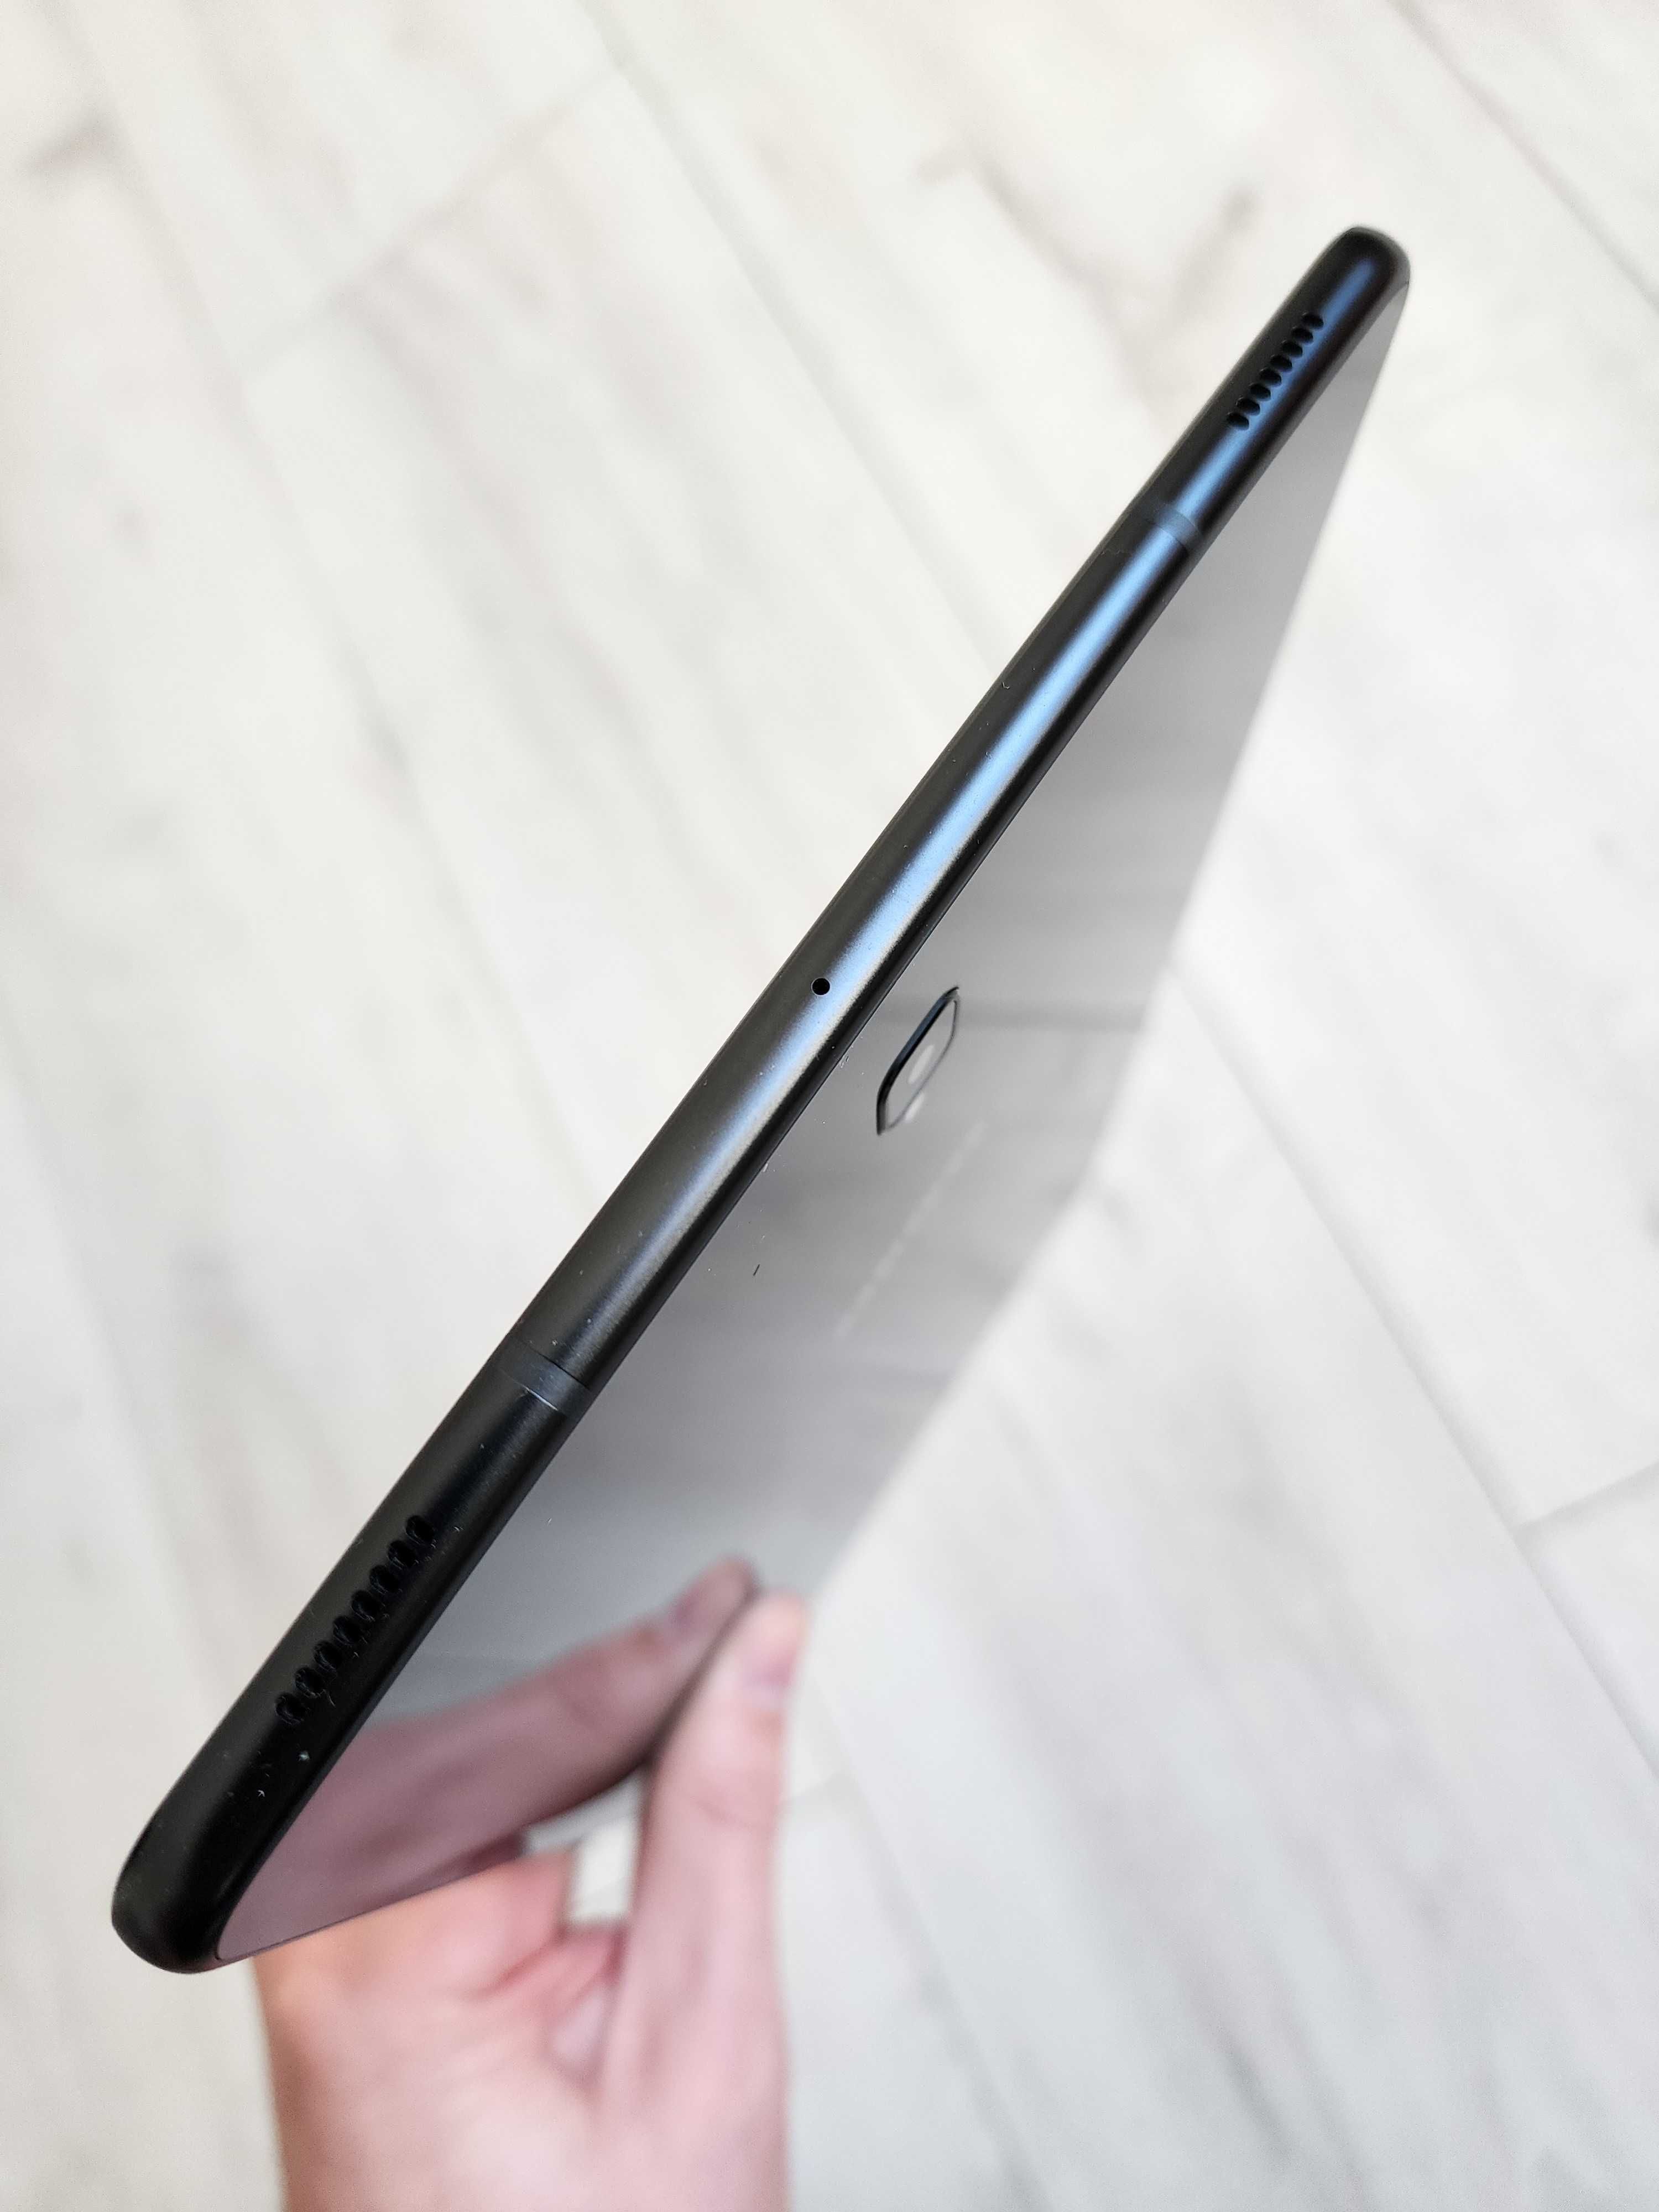 Samsung Galaxy Tab S4 10.5" 64GB Gray SM-T830 WI-FI